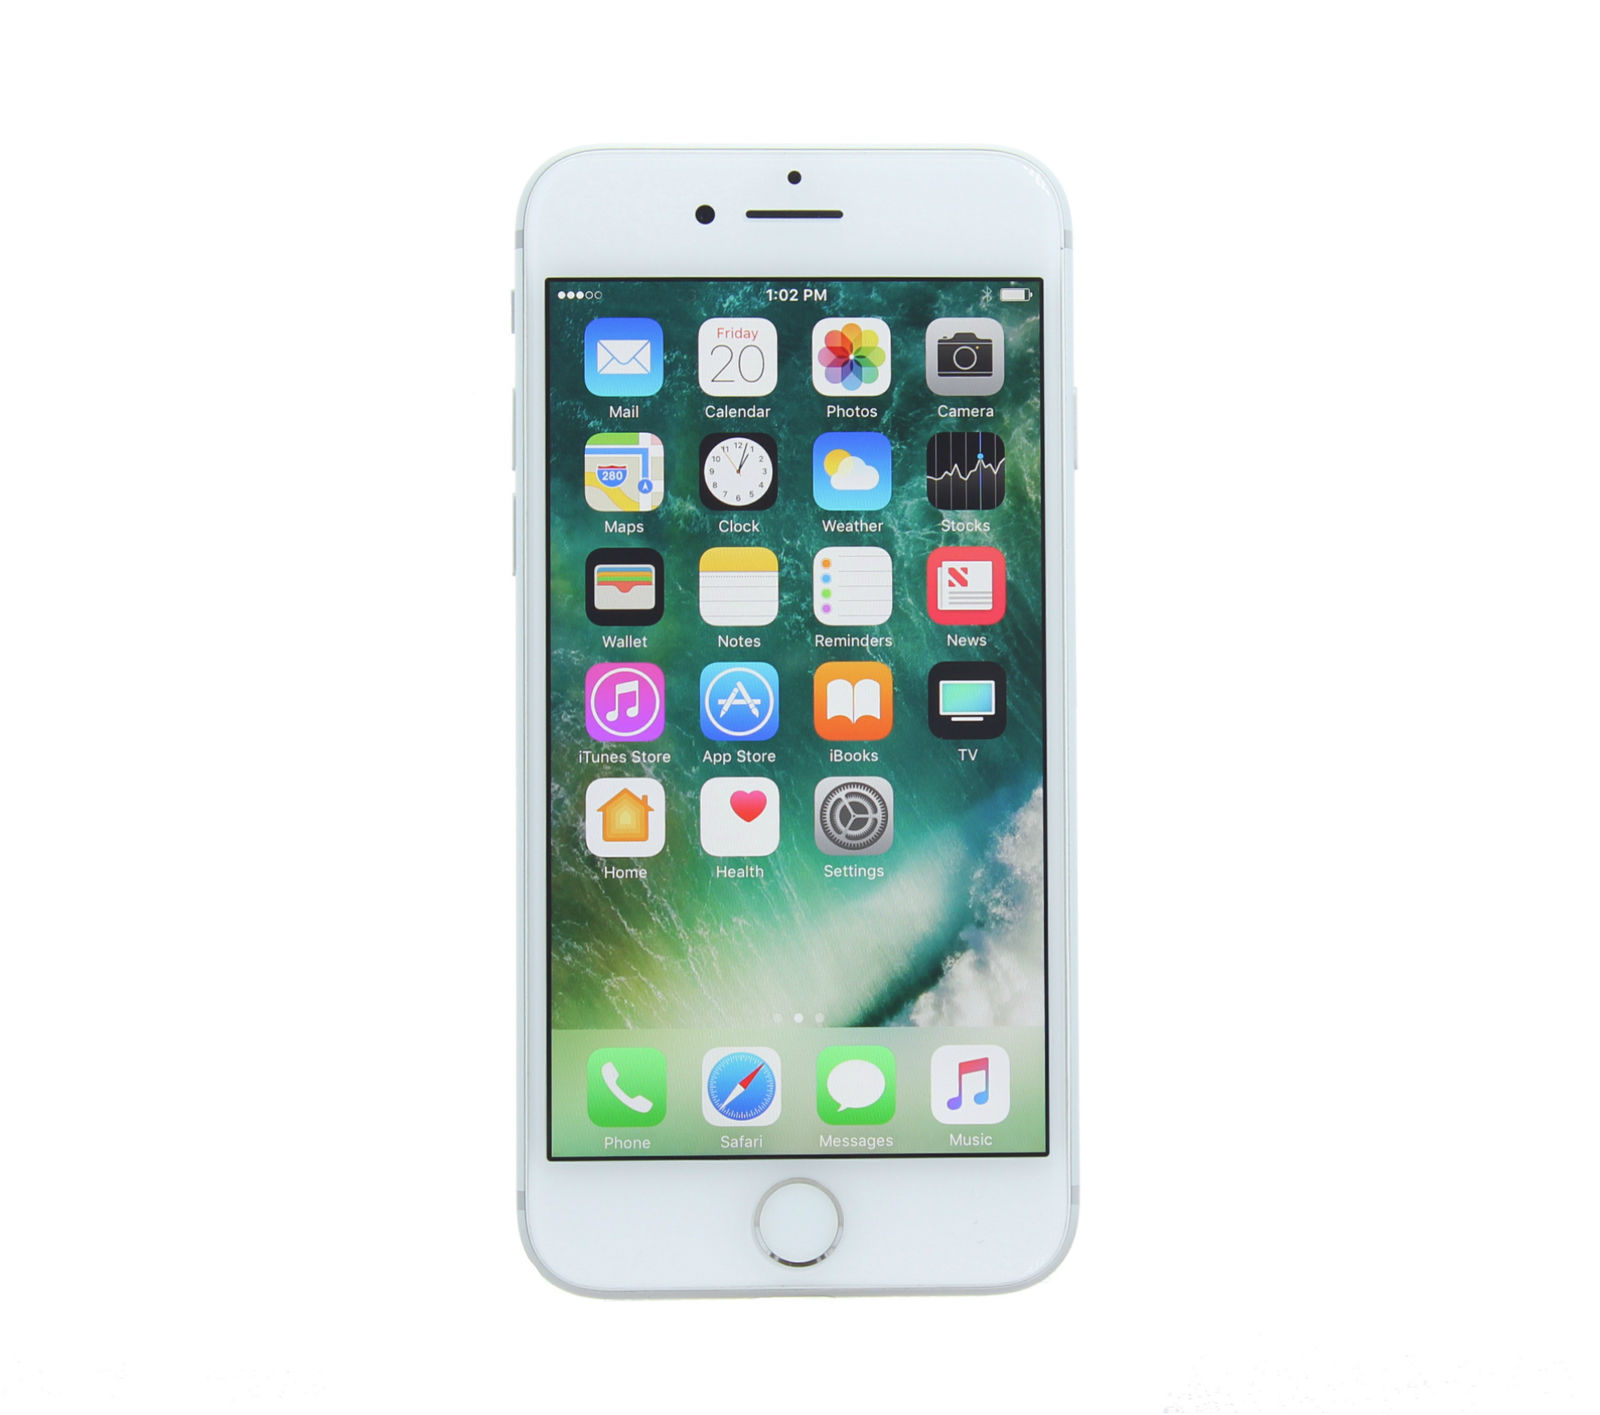 Refurbished 32GB Apple iPhone 7 unlocked GSM smartphone for $289